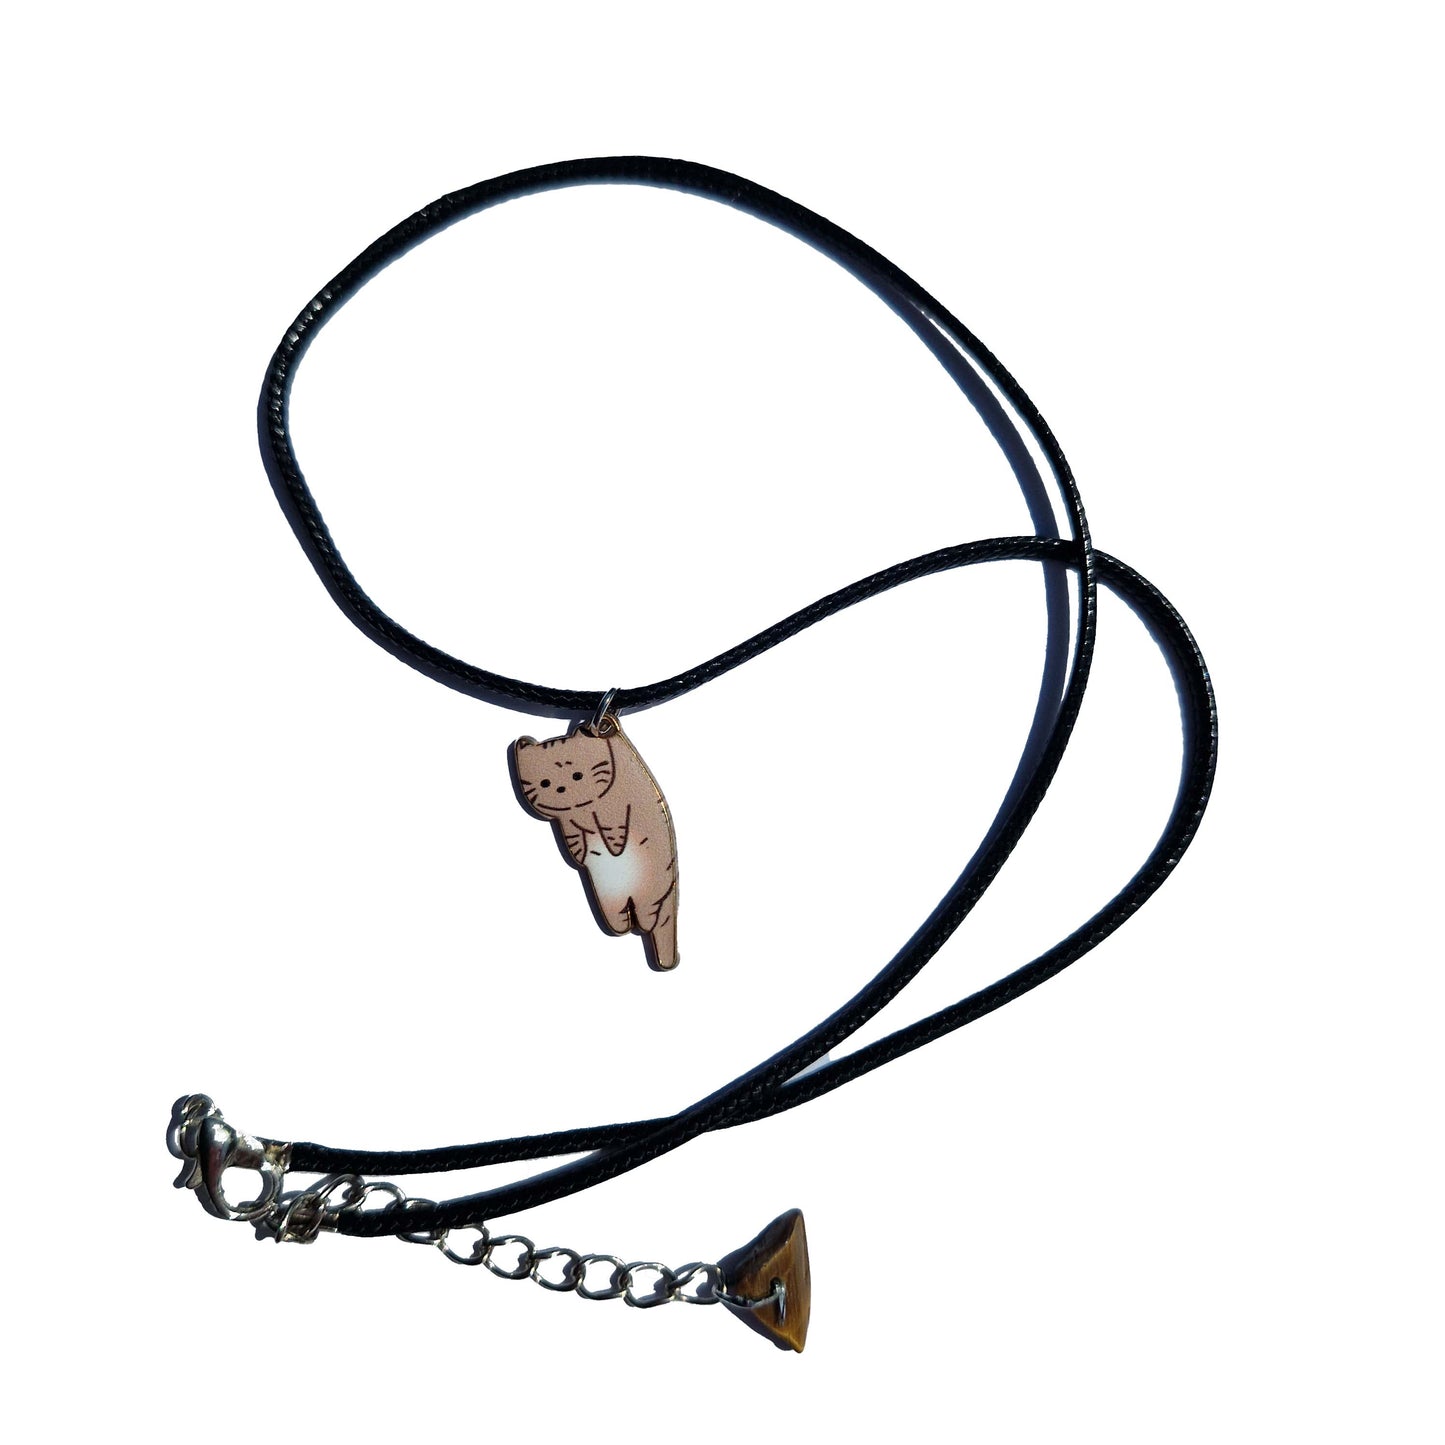 tan cat cord necklace uk costume jewellery